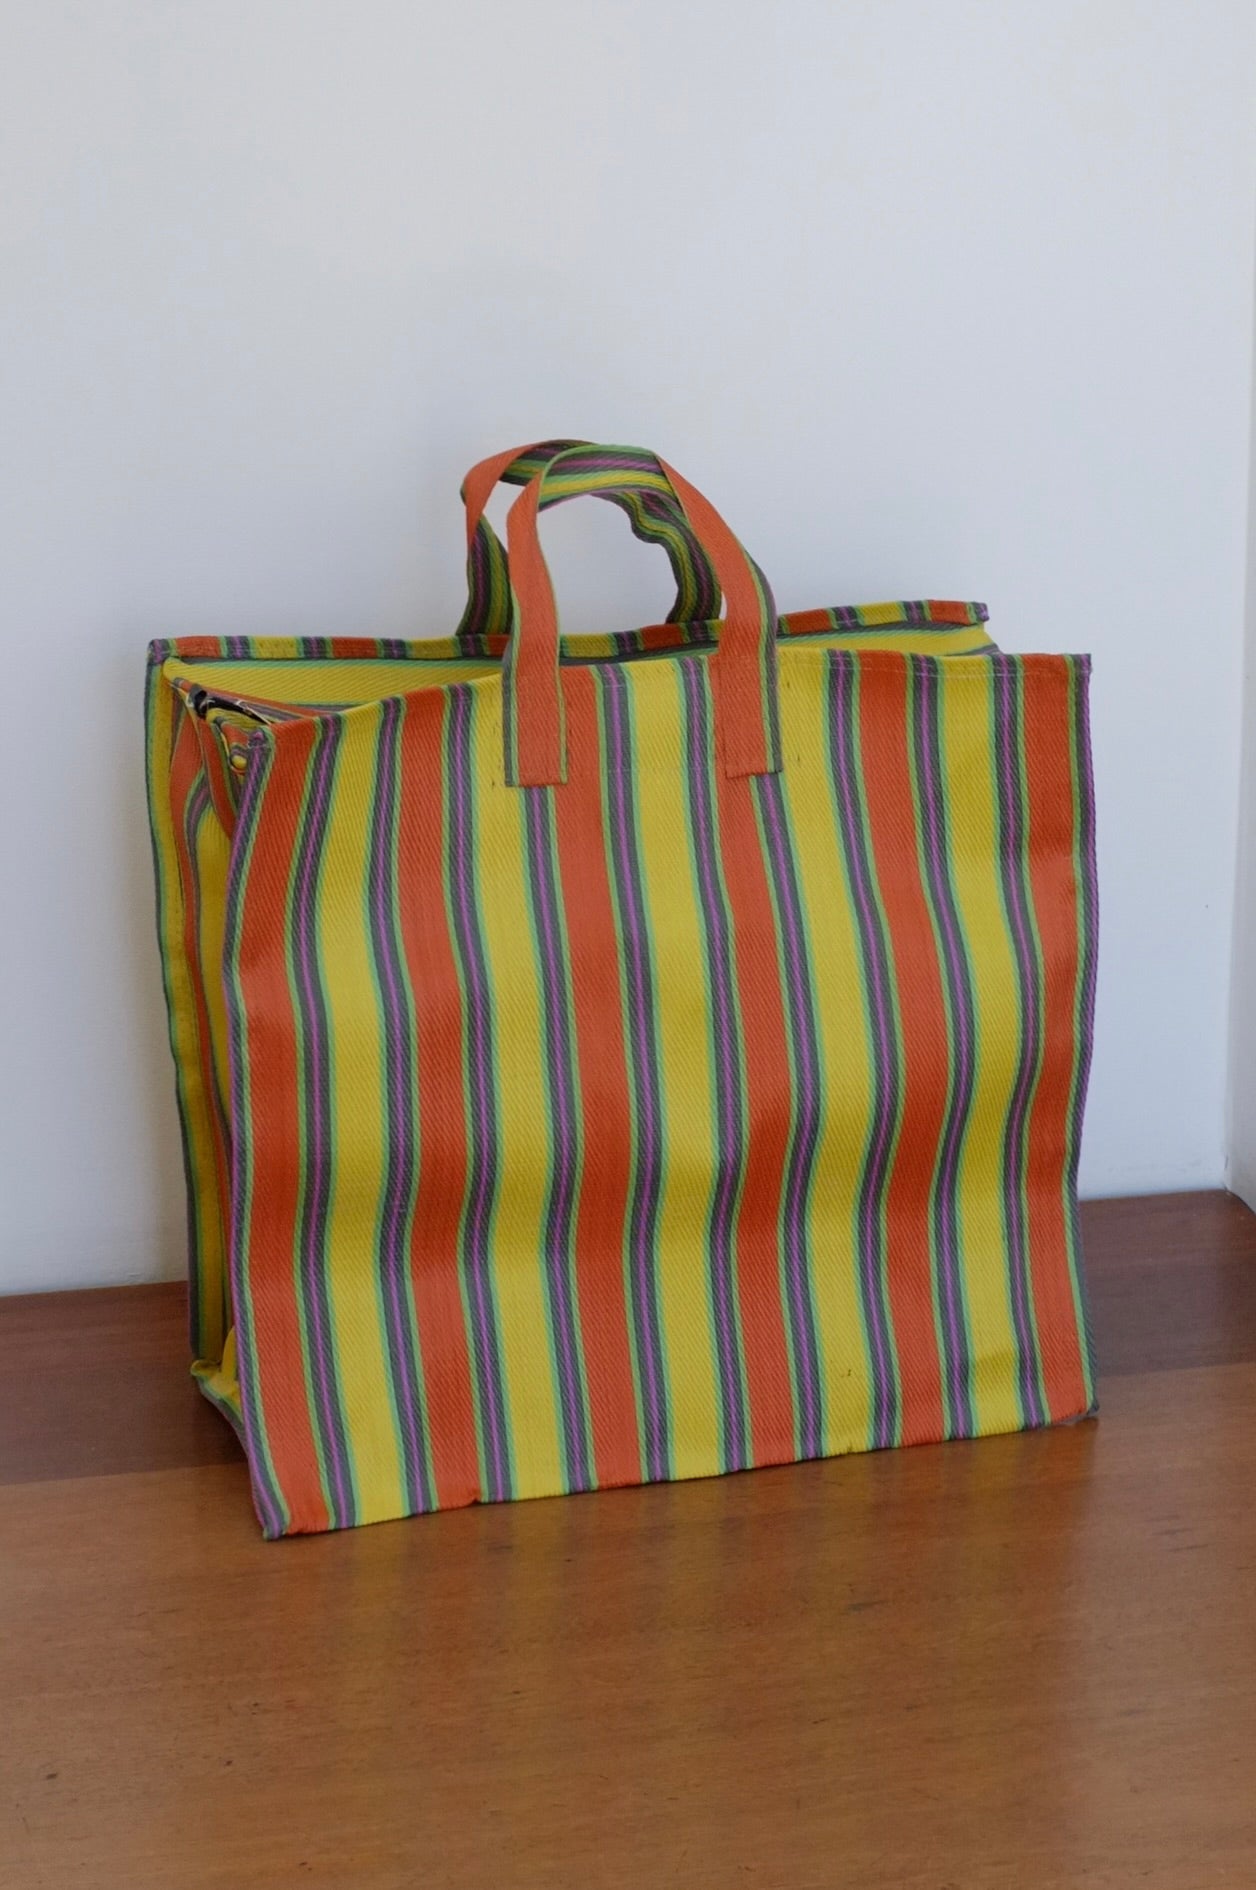 Stripe Bag - Medium Size